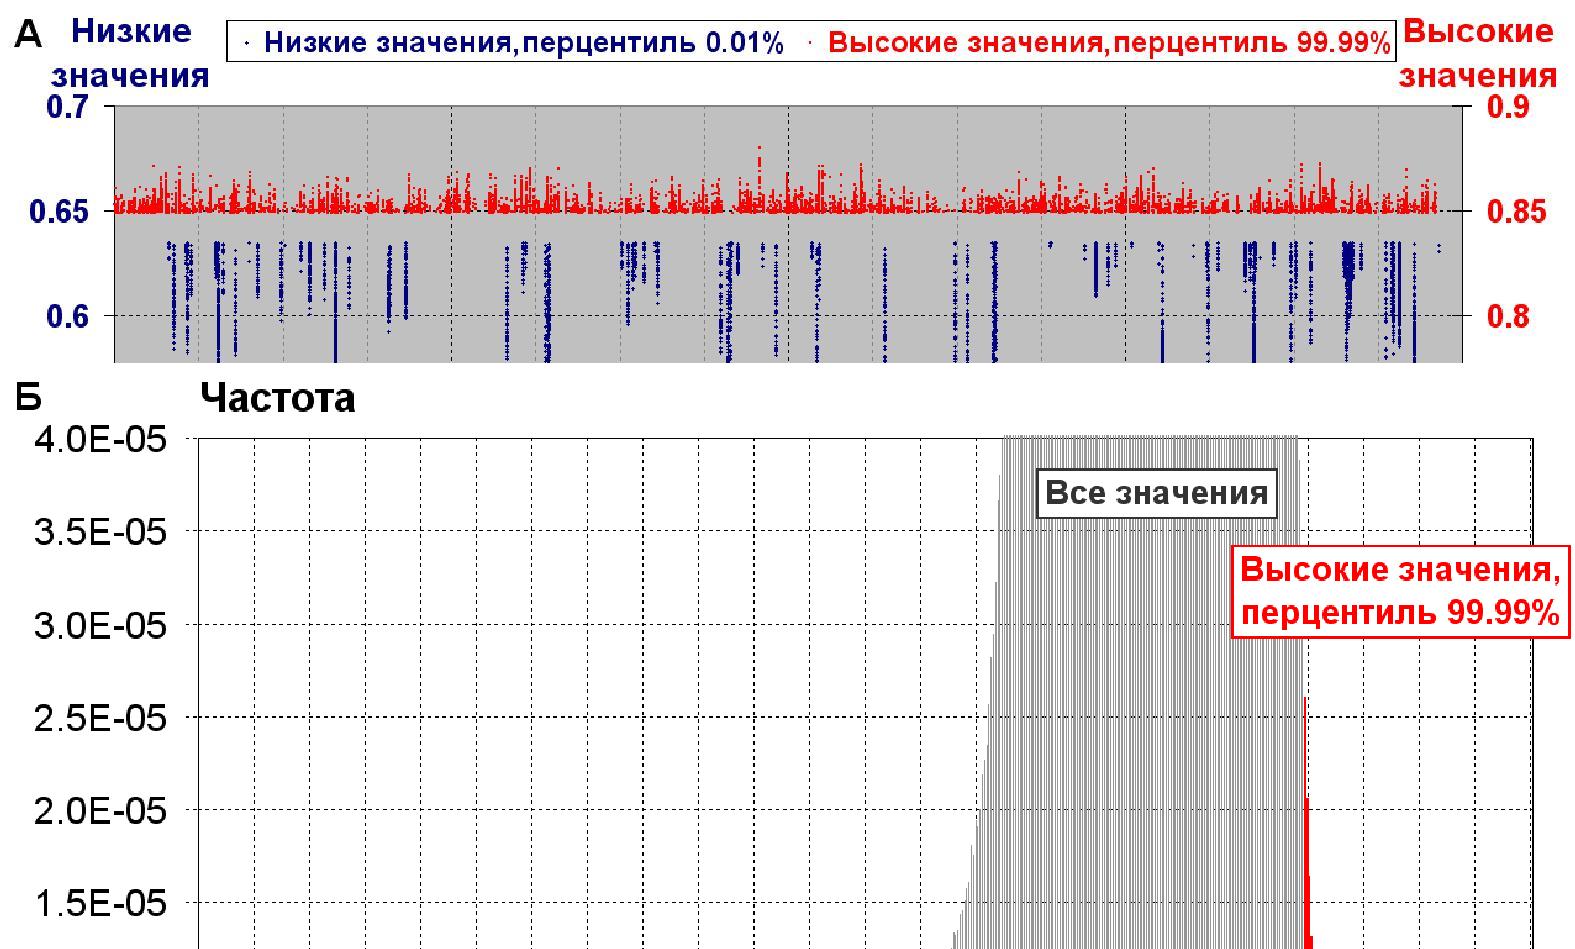 http://www.bionet.nsc.ru/images/important/5_2.JPG